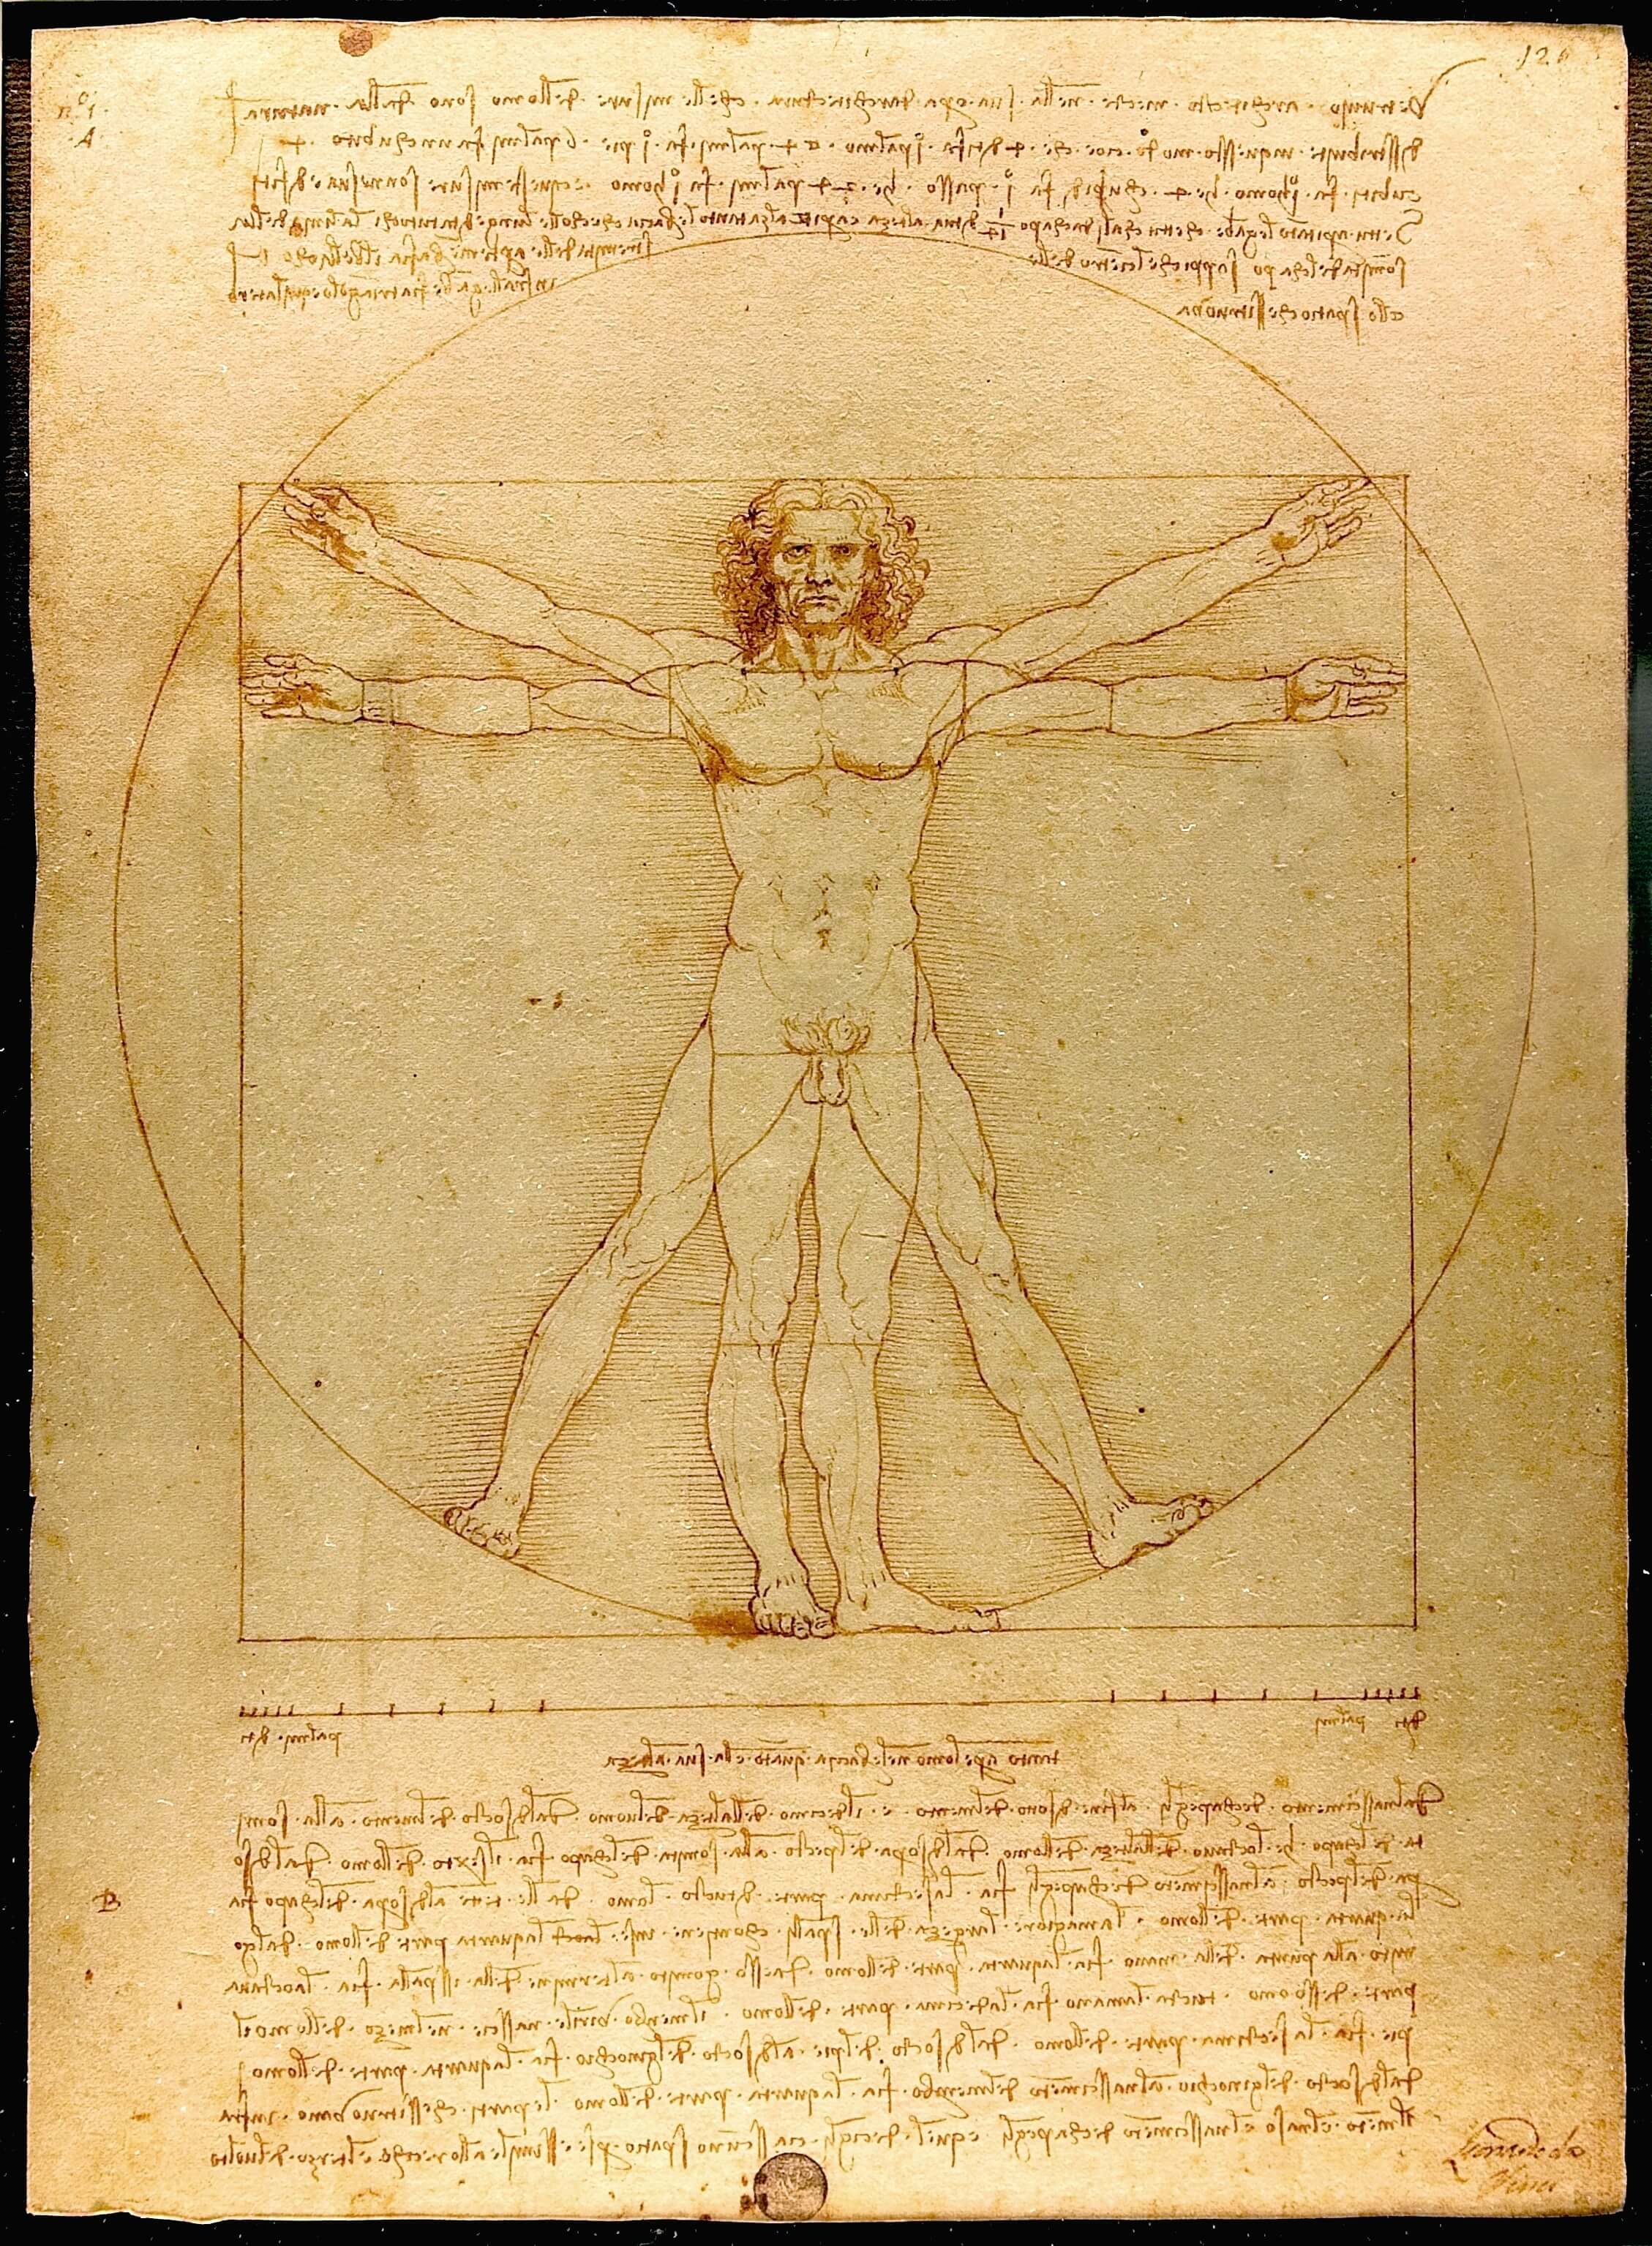 Da Vinci's Vitruvian man is an early example of STEM vs arts